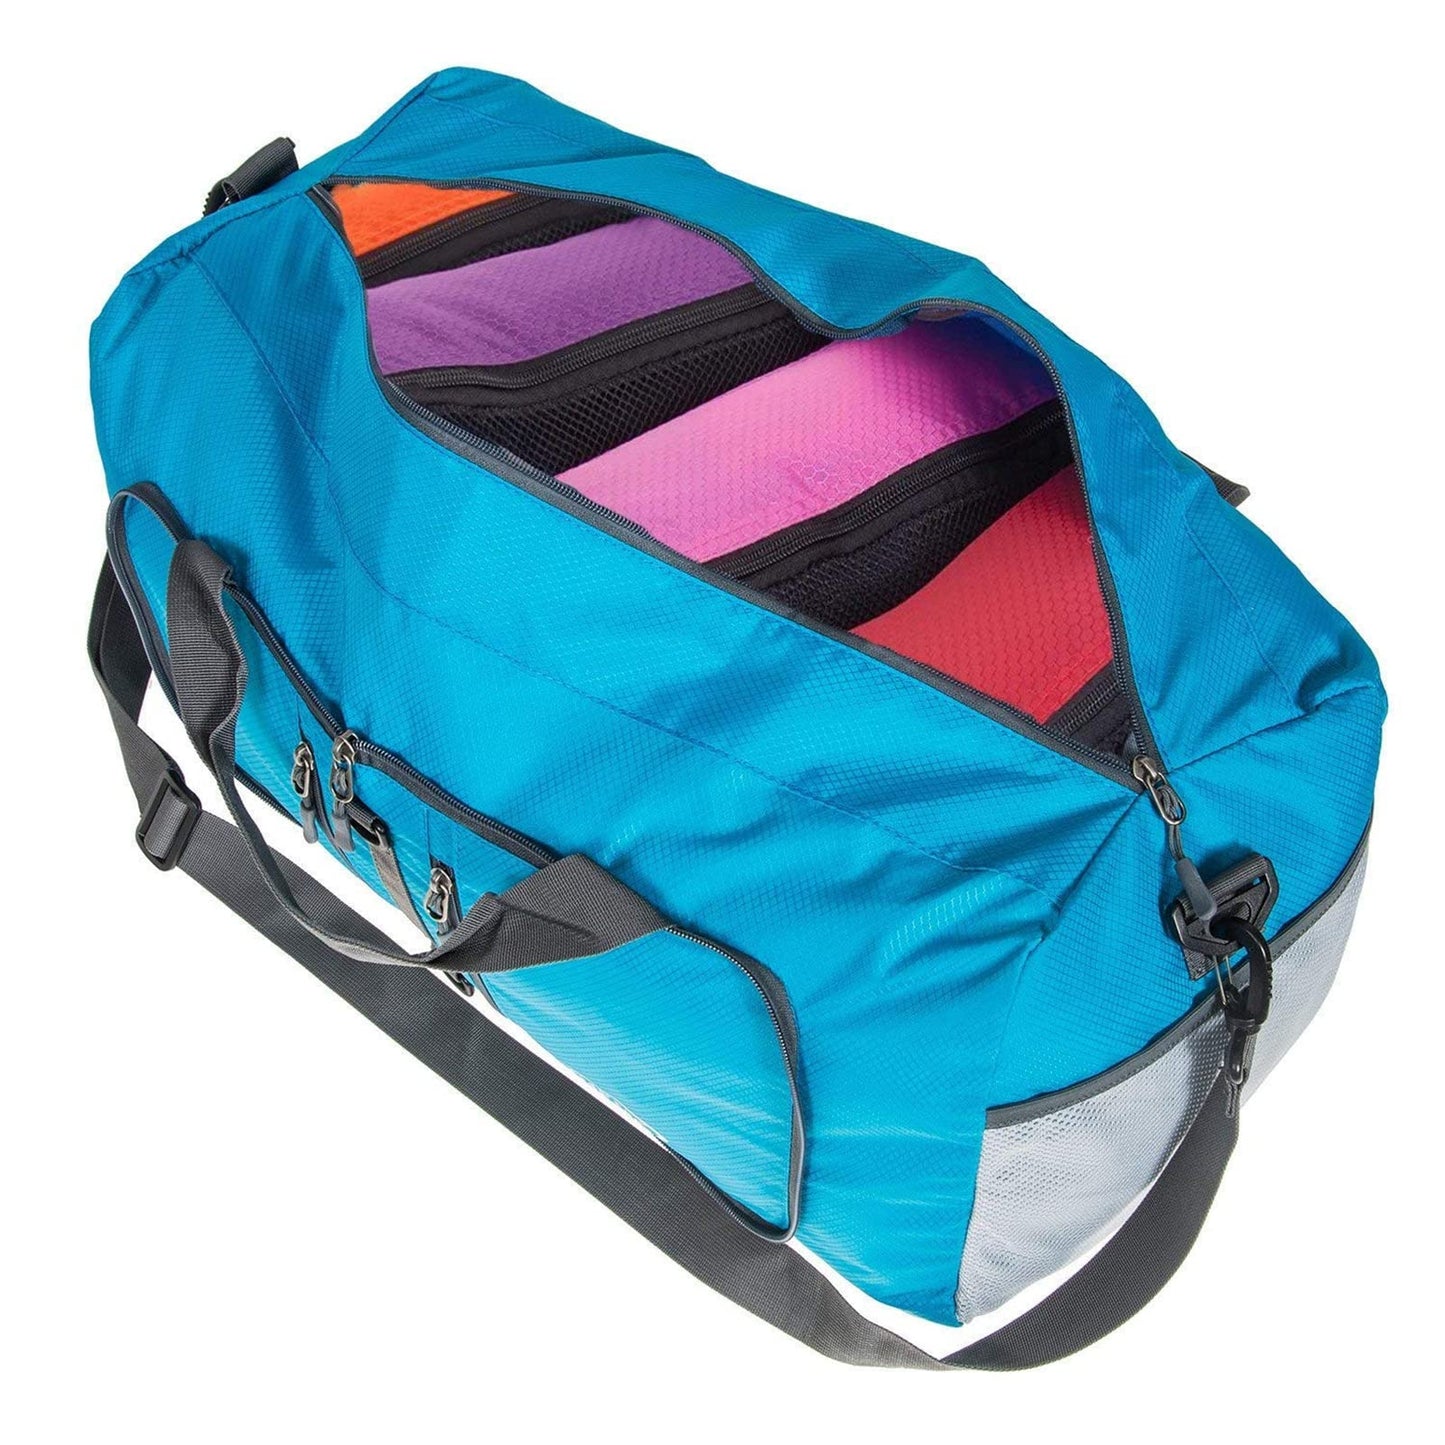 G4Free 40L Foldable Water Resistant Duffel Bag